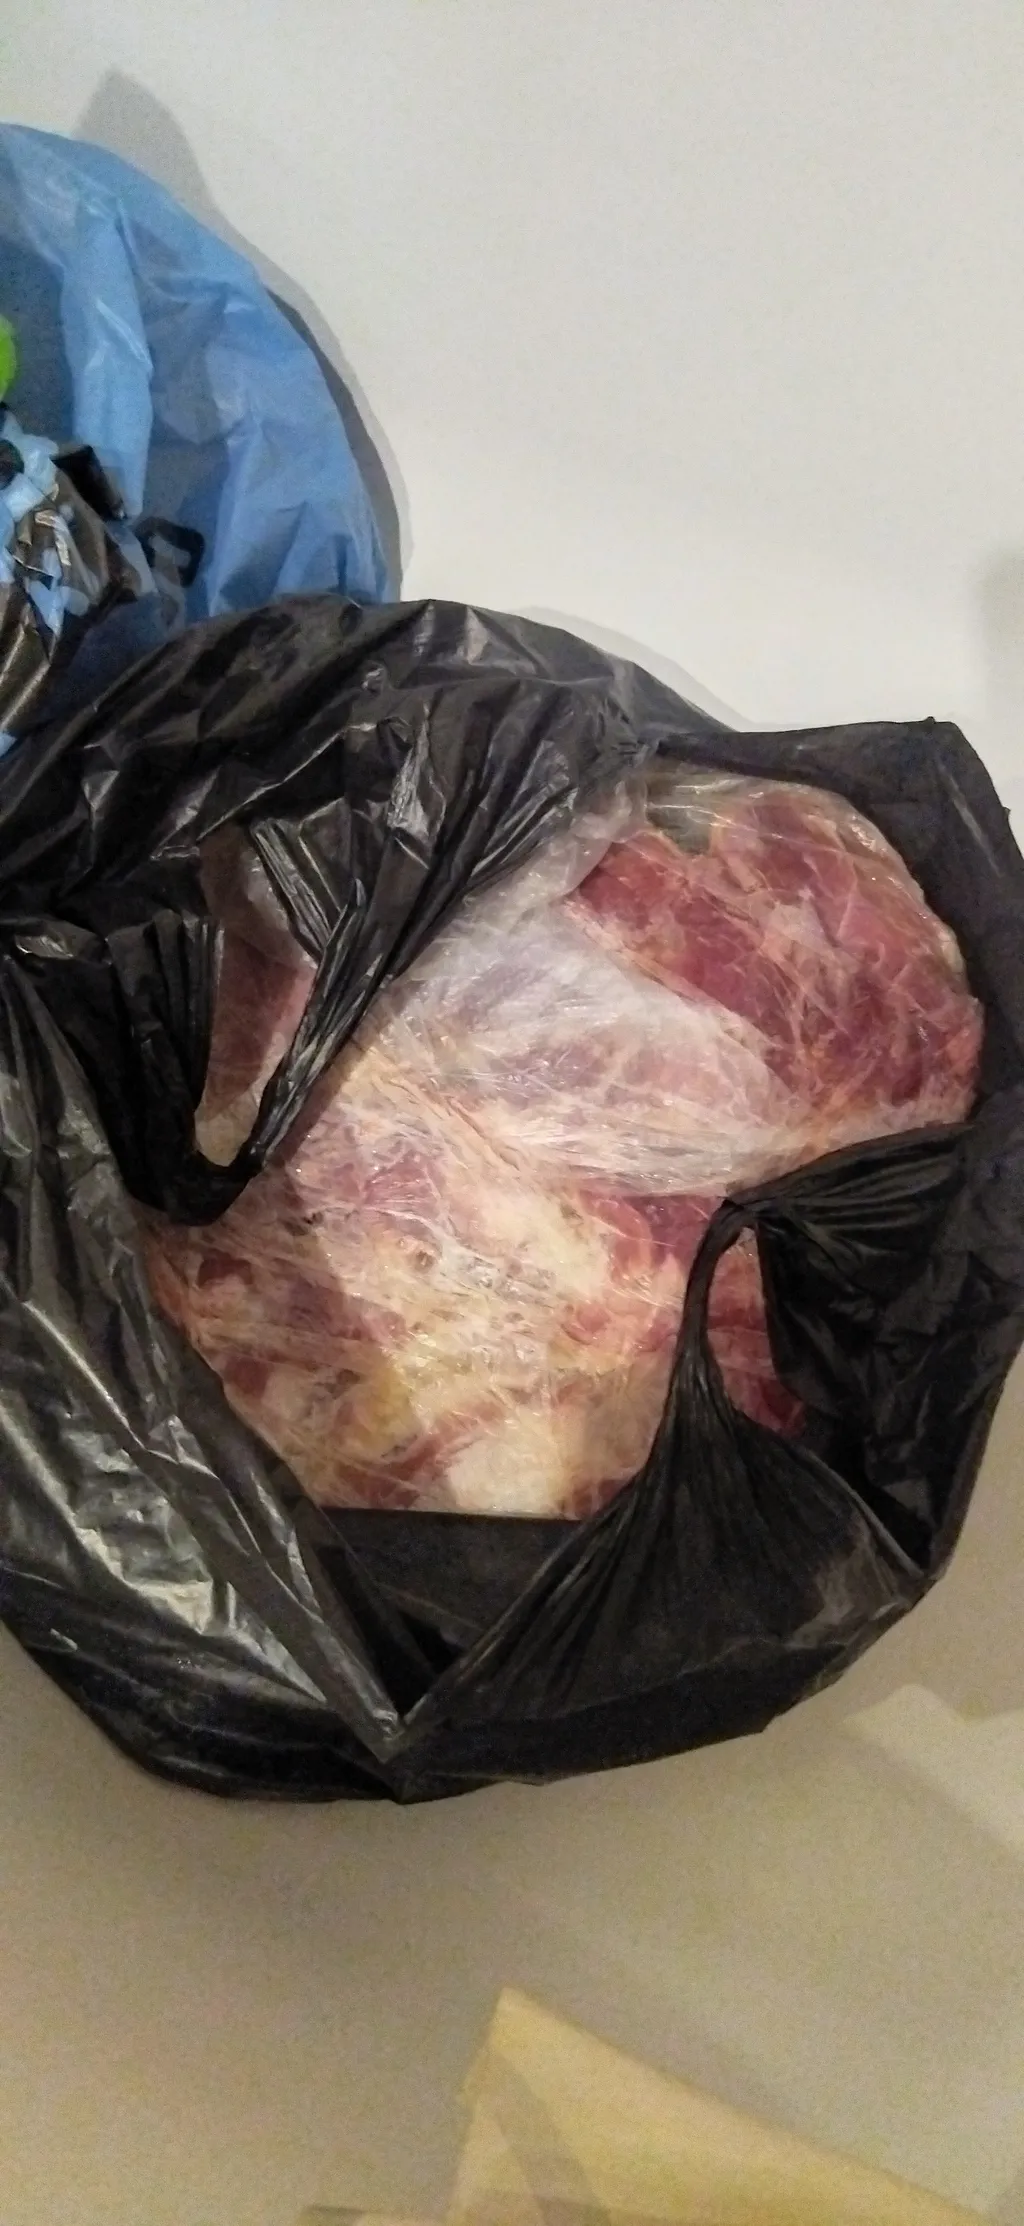 фотография продукта мясо курица свинина